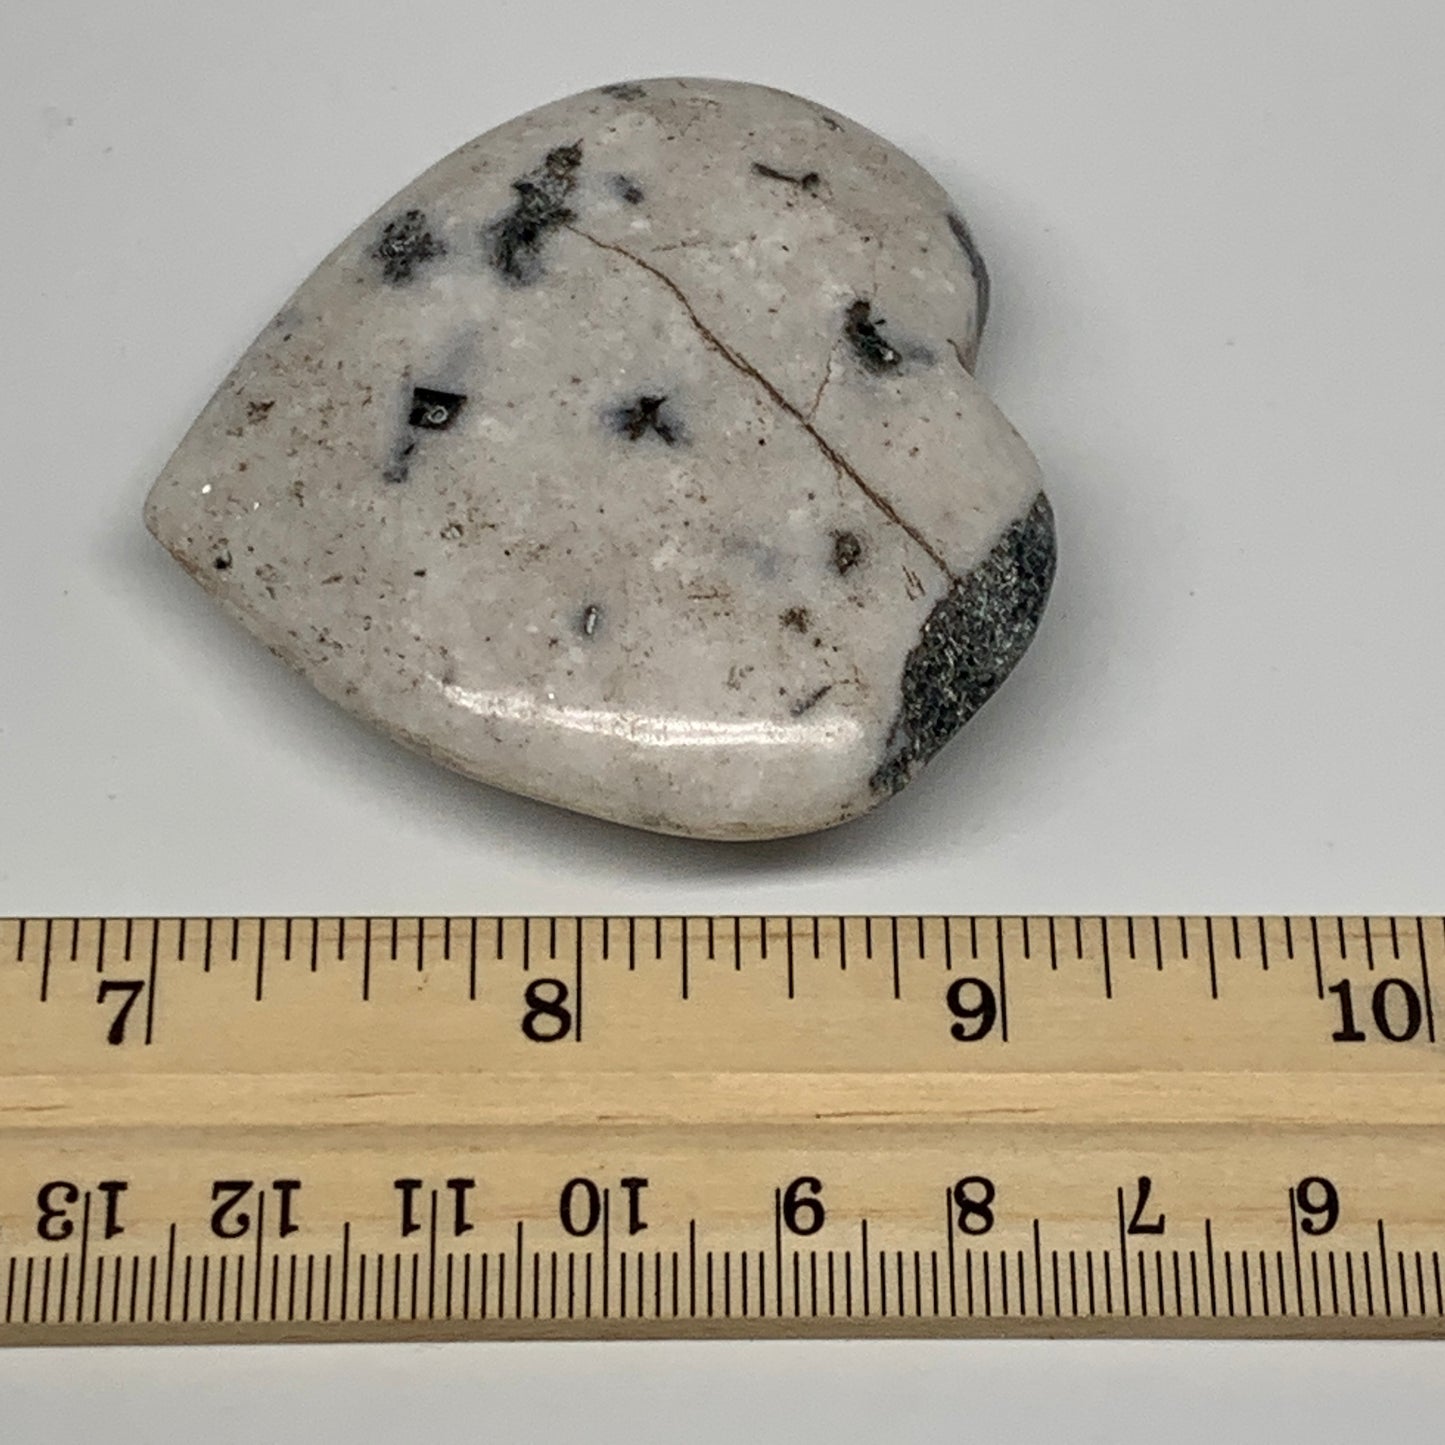 72.1g, 2.2"x2.3"x0.7" Natural Black K2 Heart Polished Healing Crystal, B10377